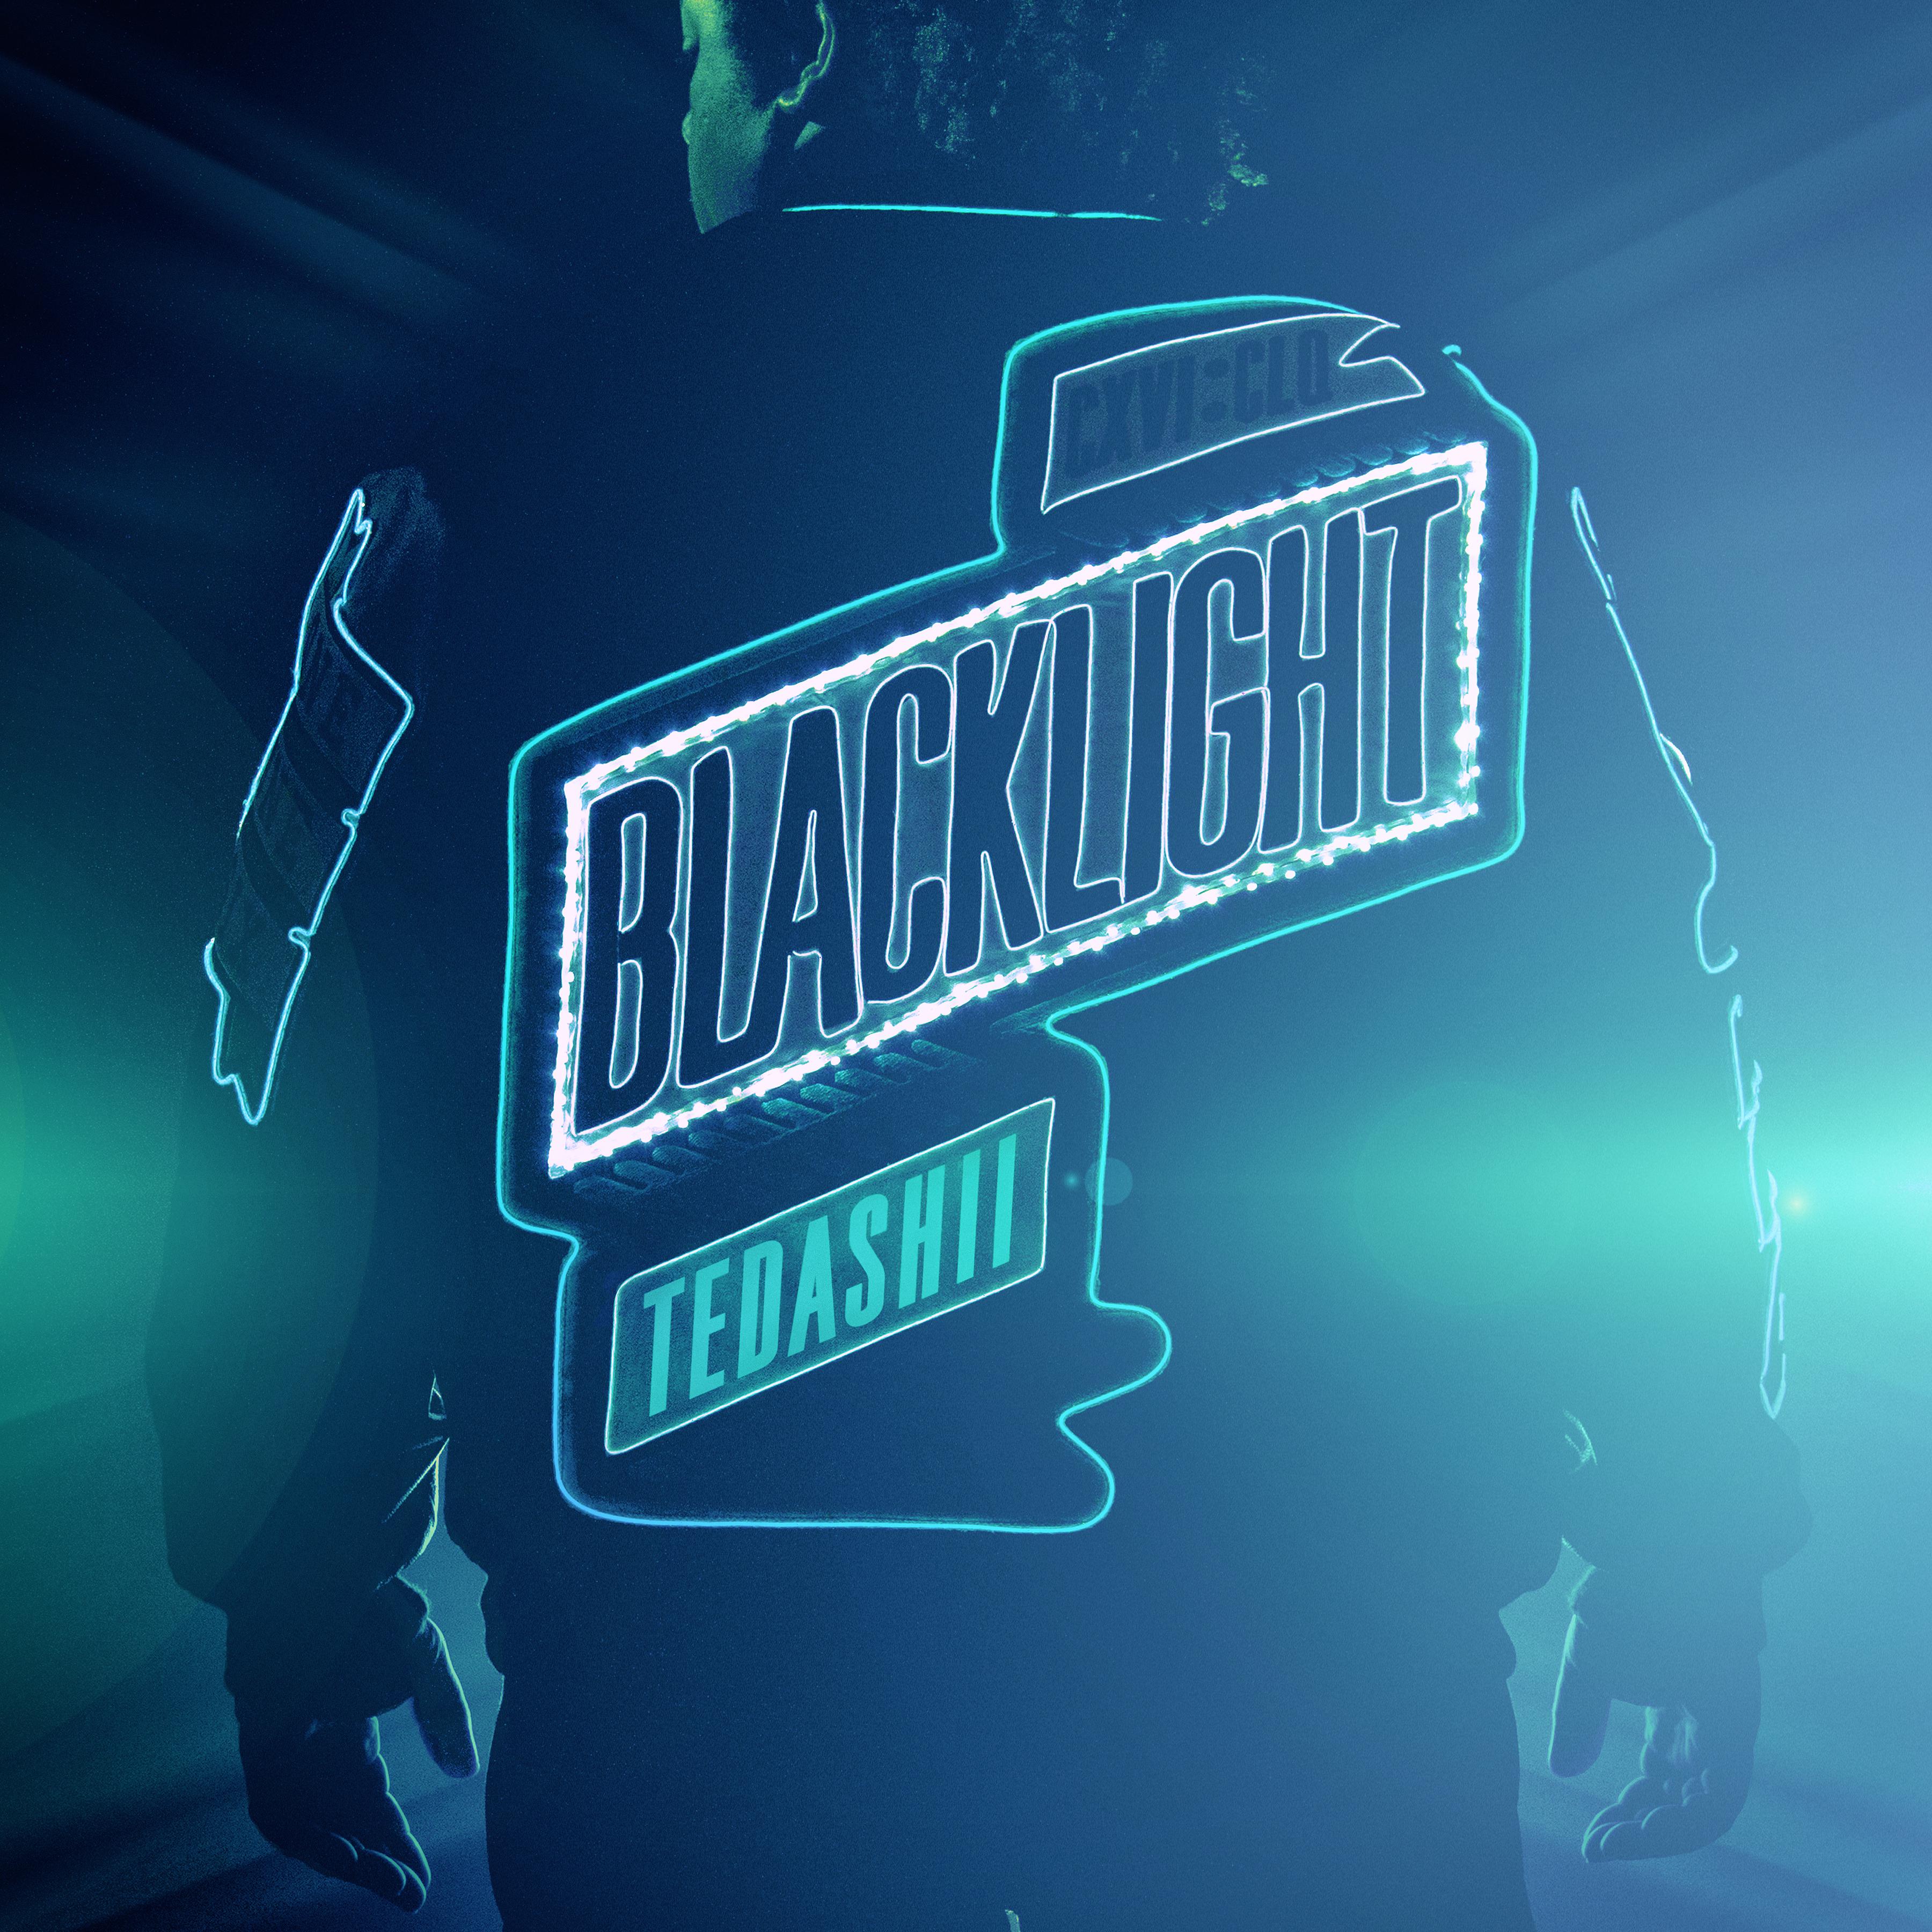 Blacklight专辑